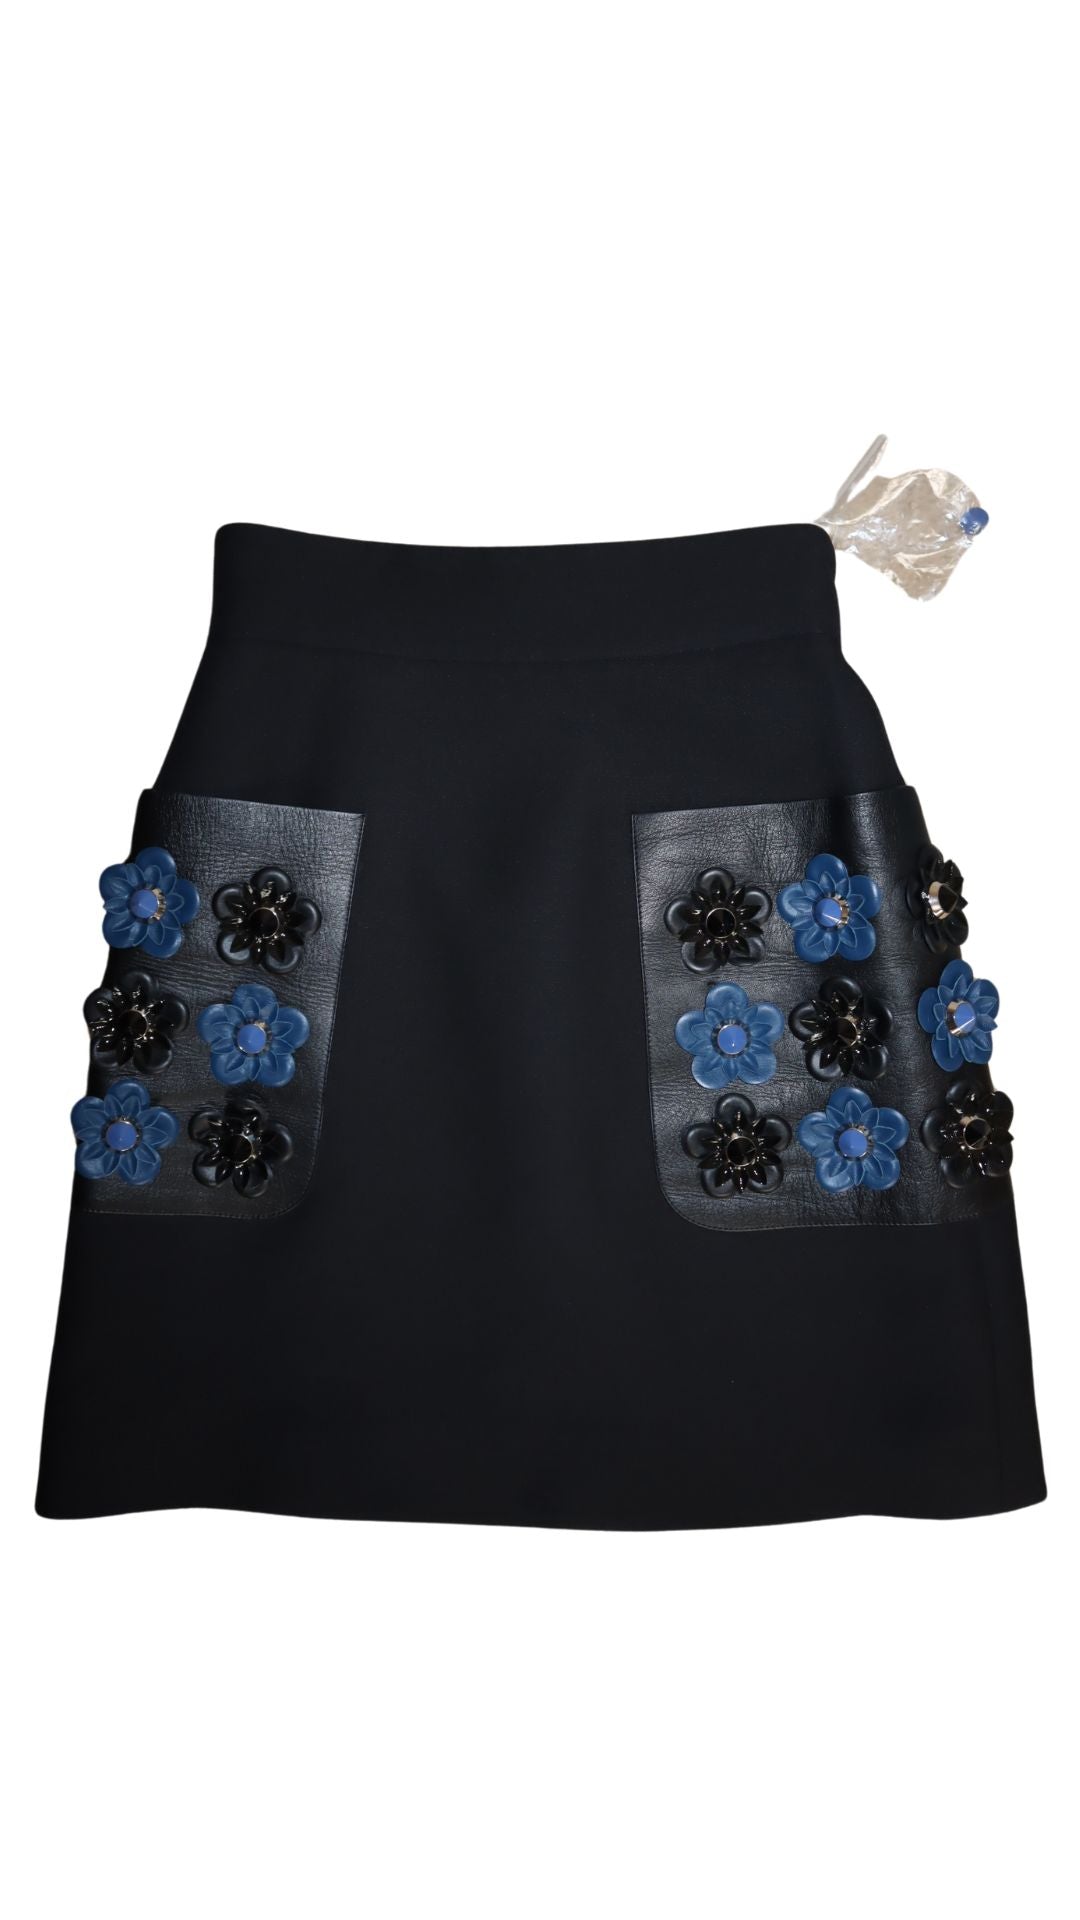 Fendi Black Leather Floral Skirt